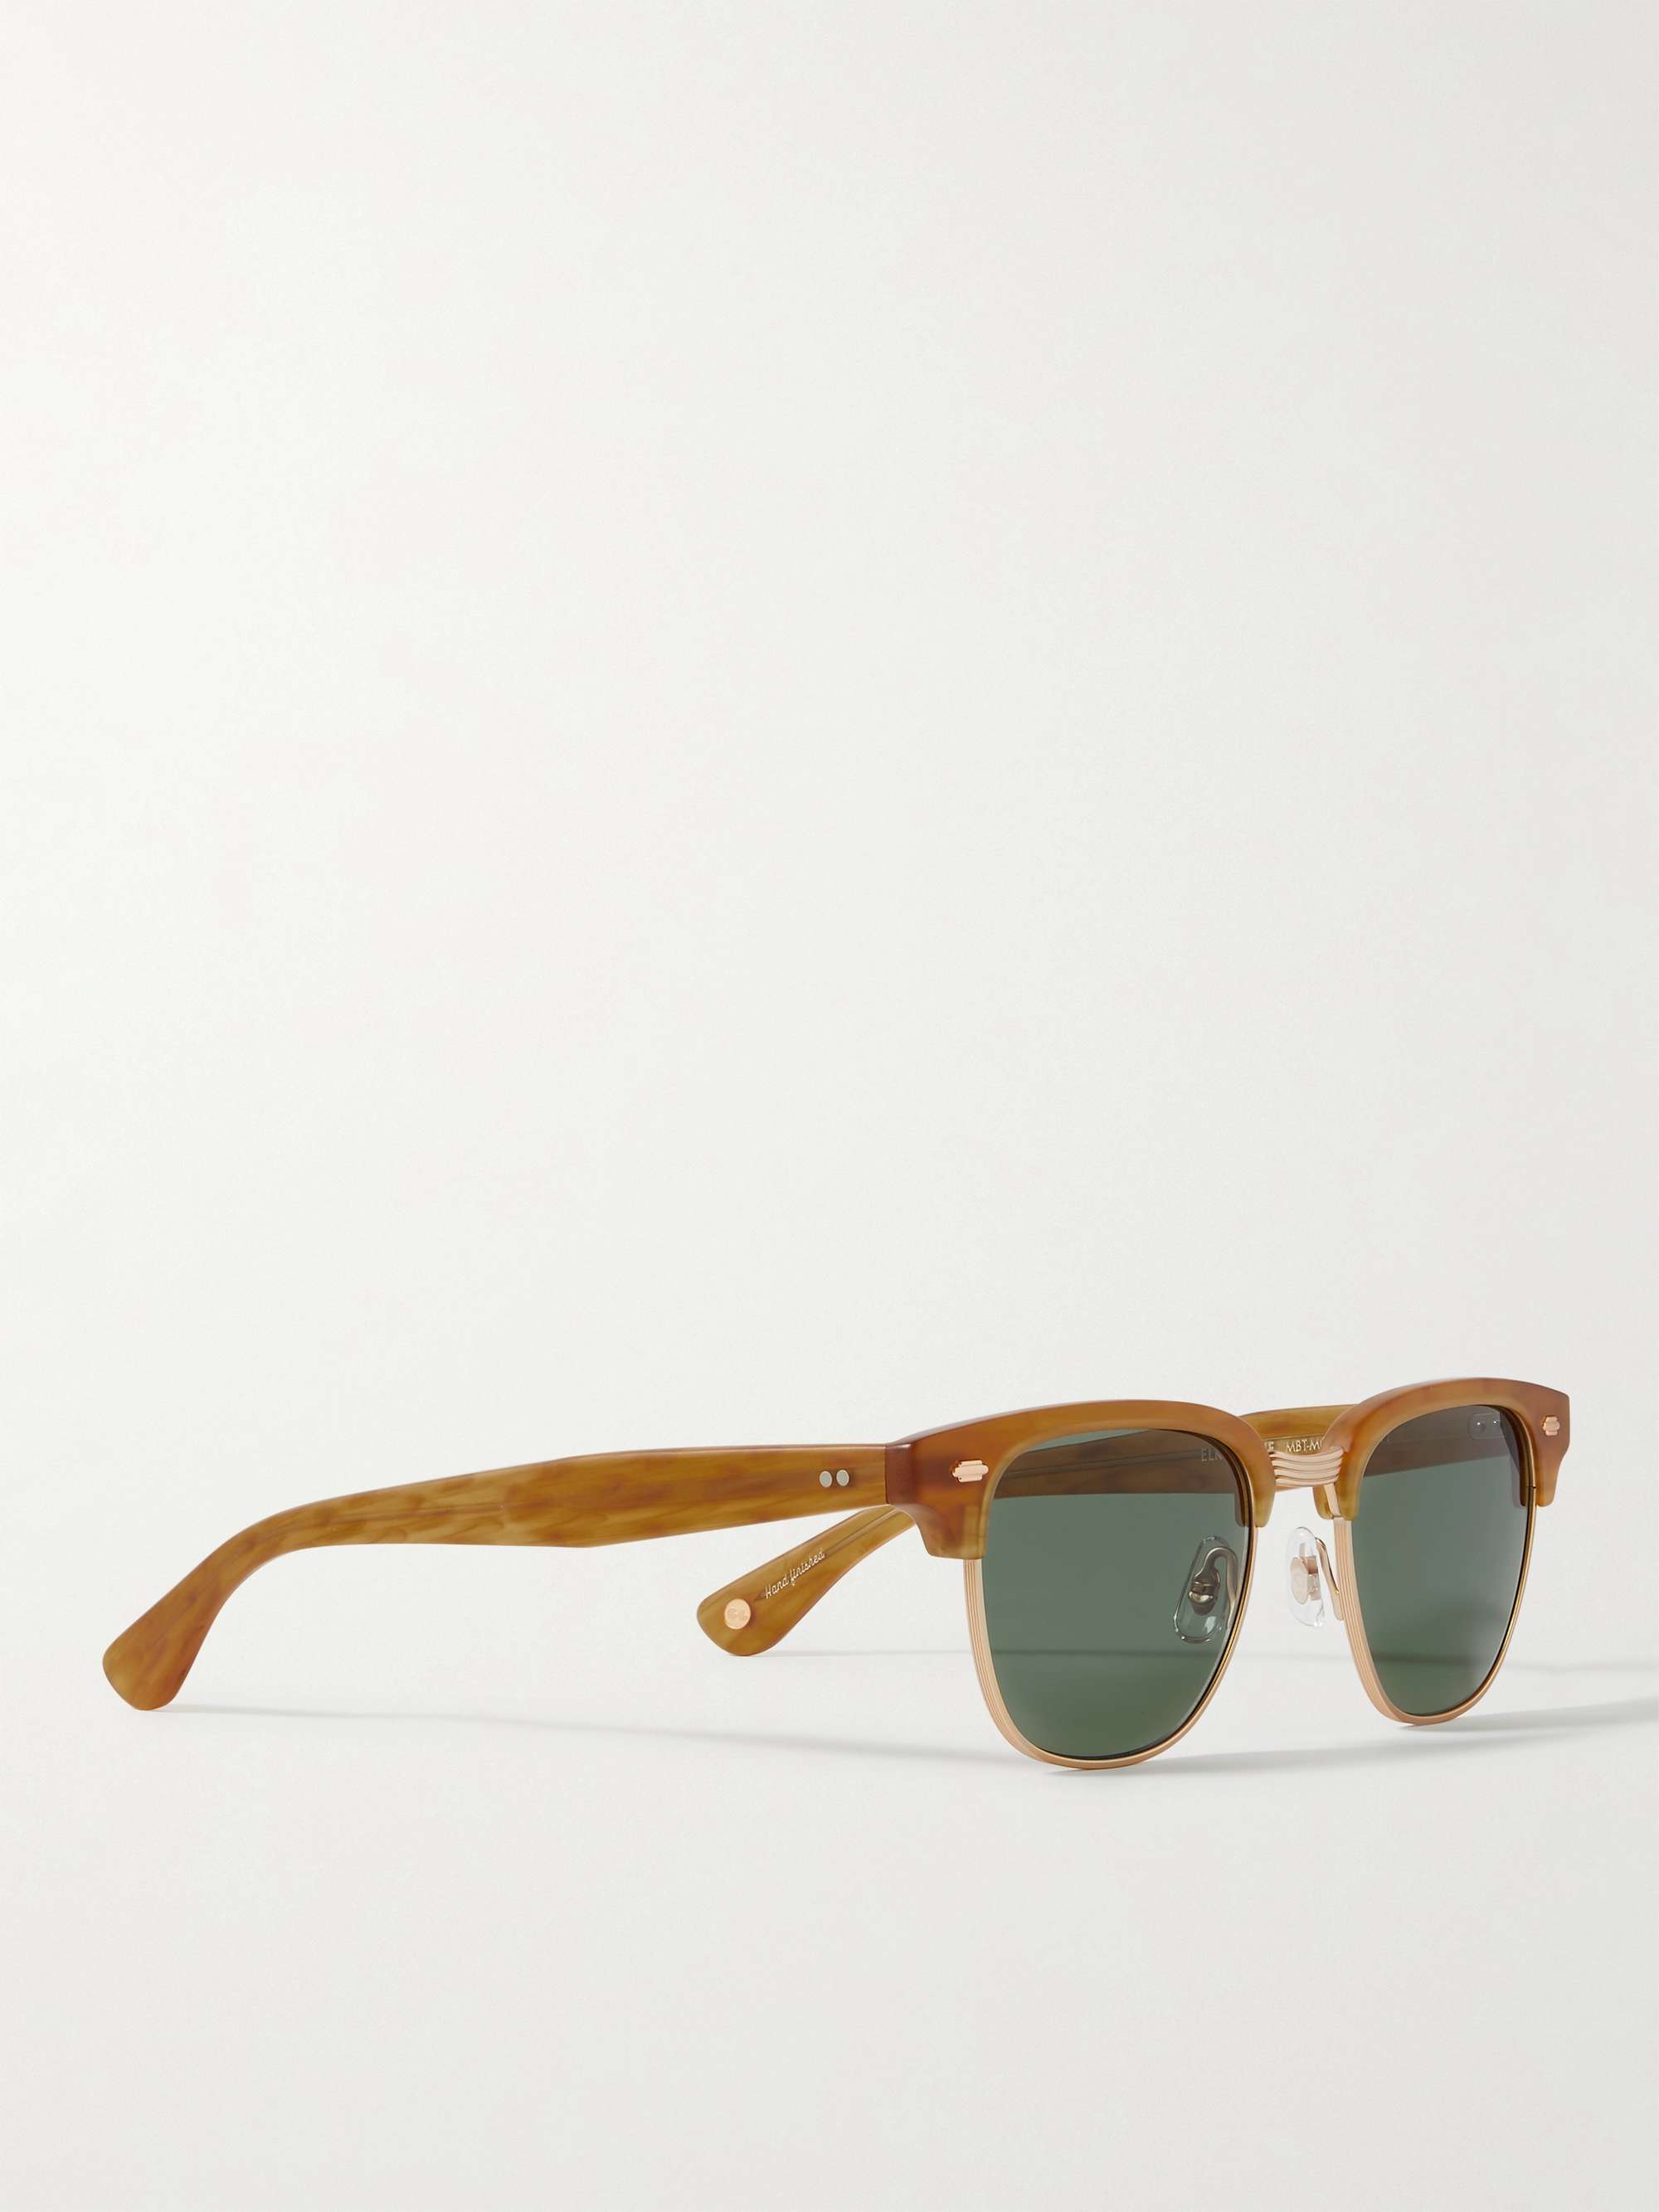 GARRETT LEIGHT CALIFORNIA OPTICAL Elkgrove 49 D-Frame Acetate and Gold-Tone Sunglasses